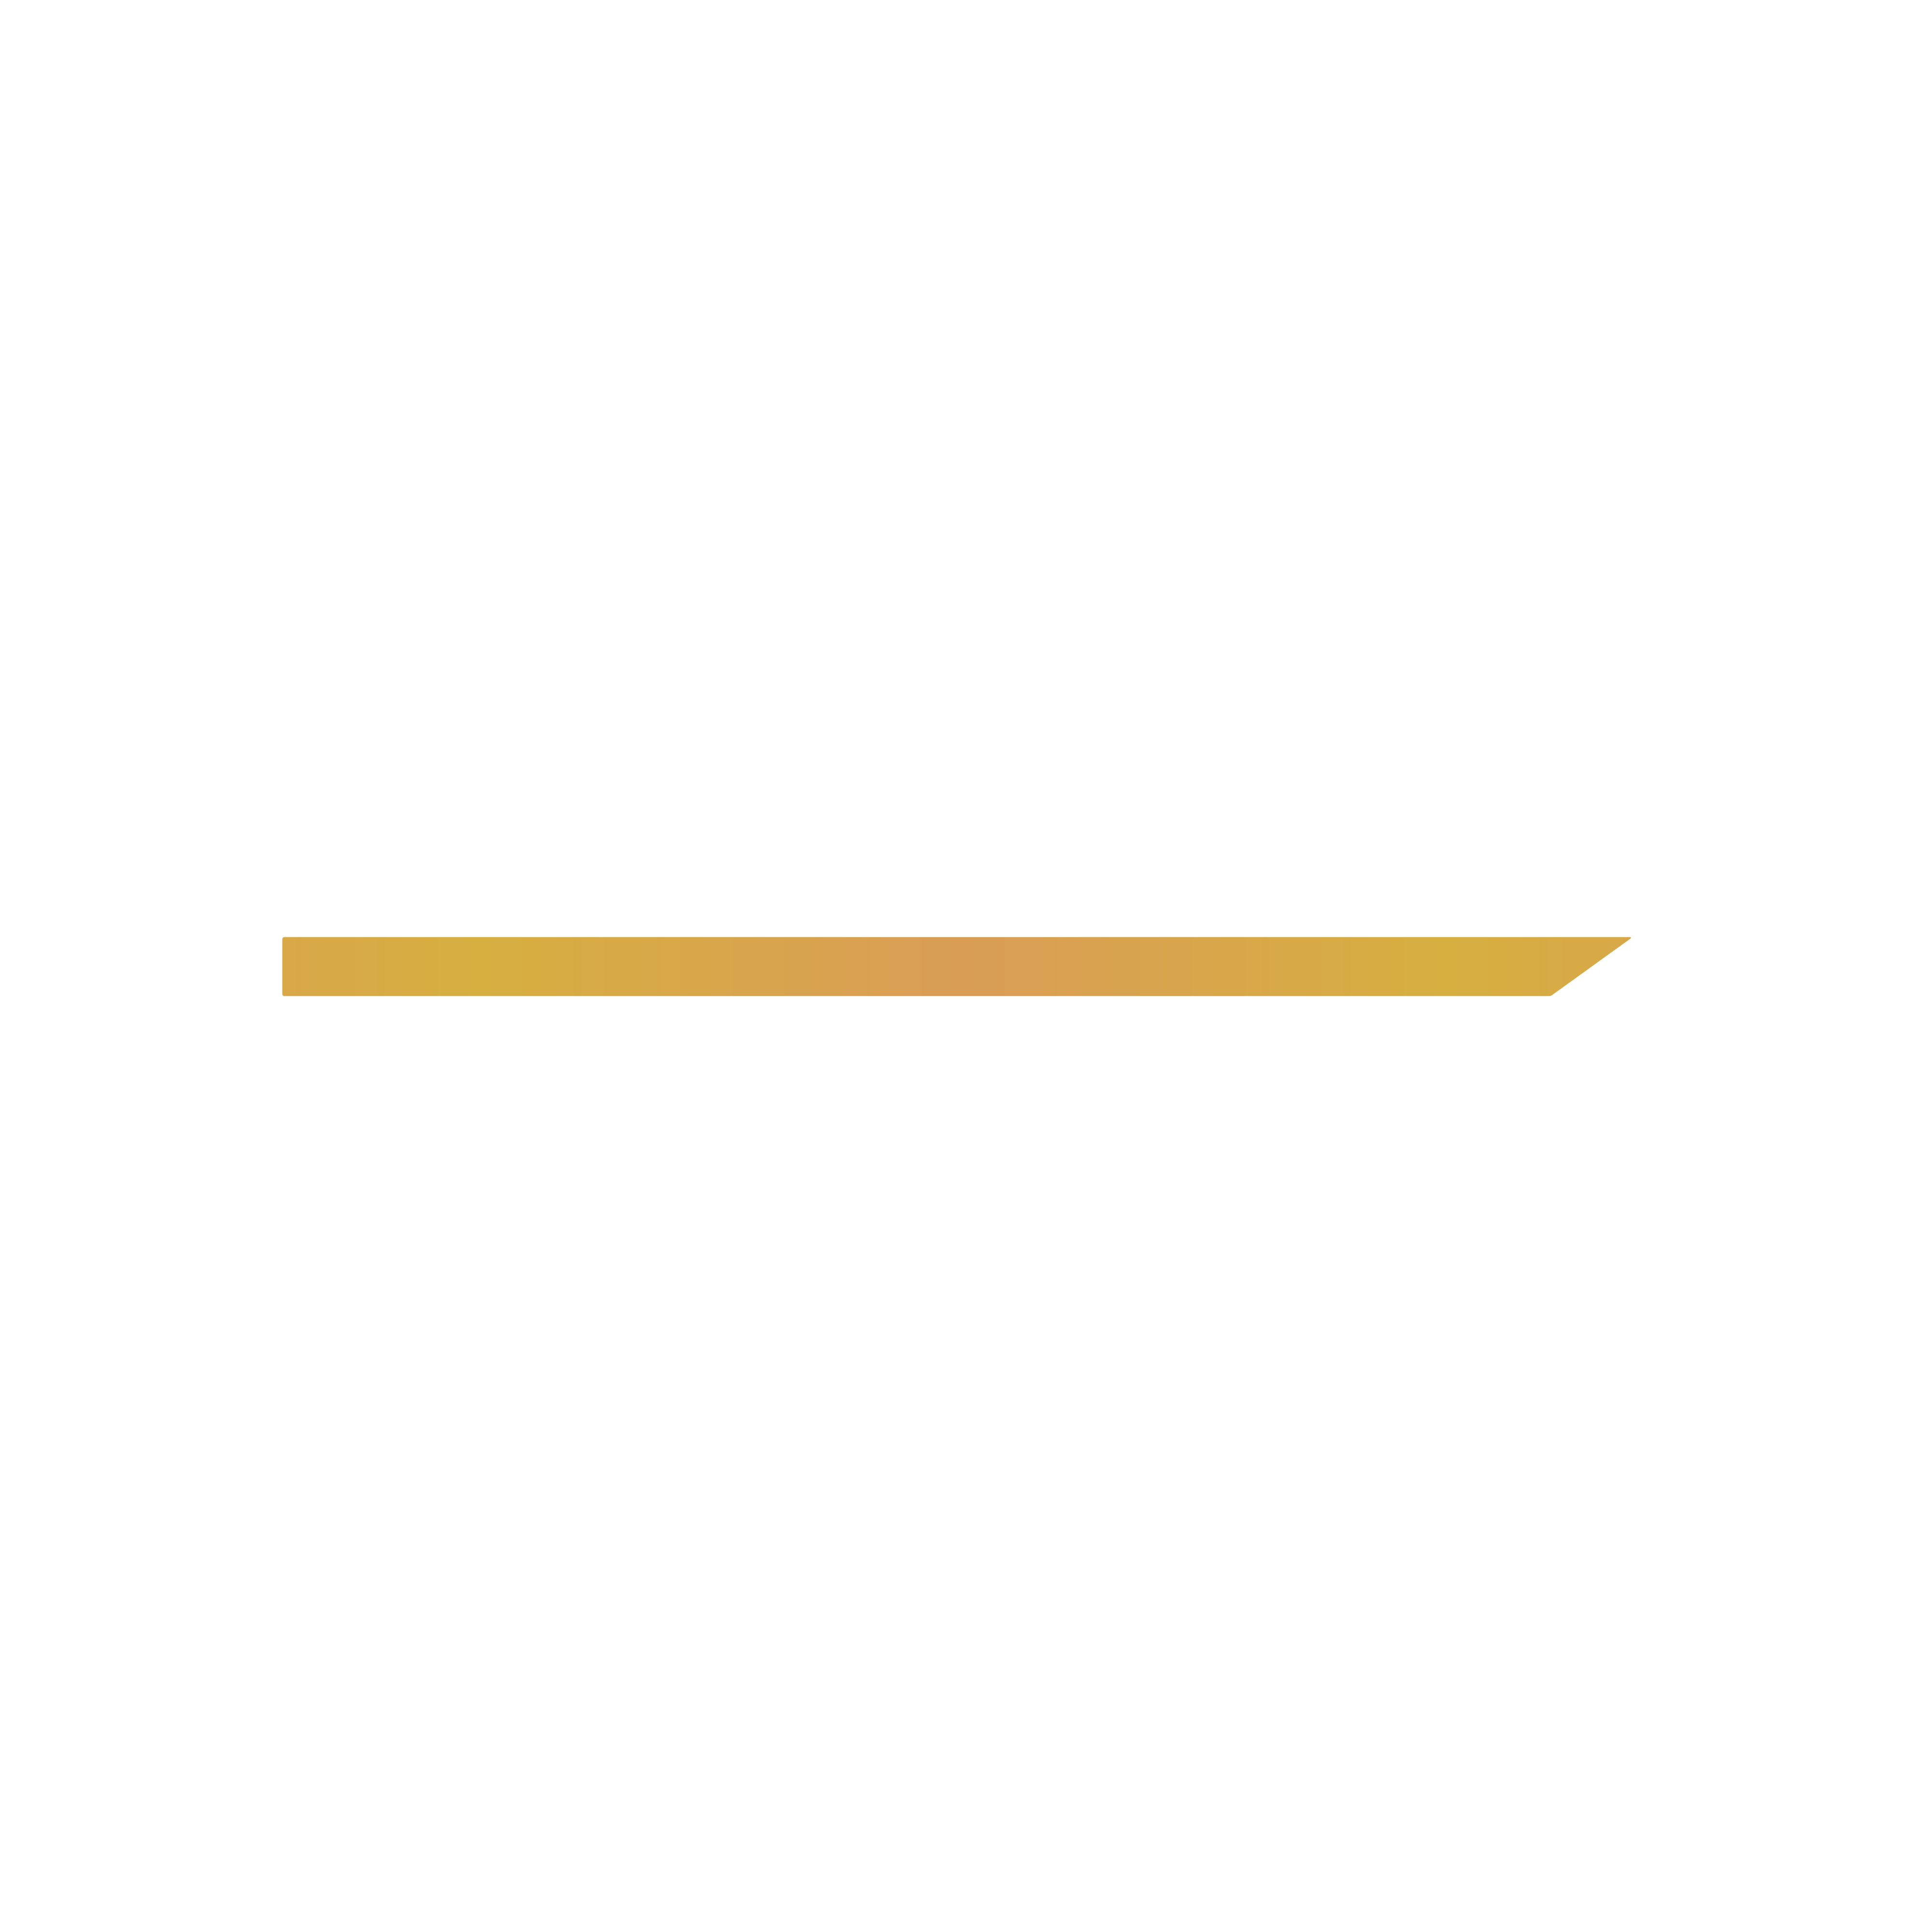 ONETAP.SU Logo contest